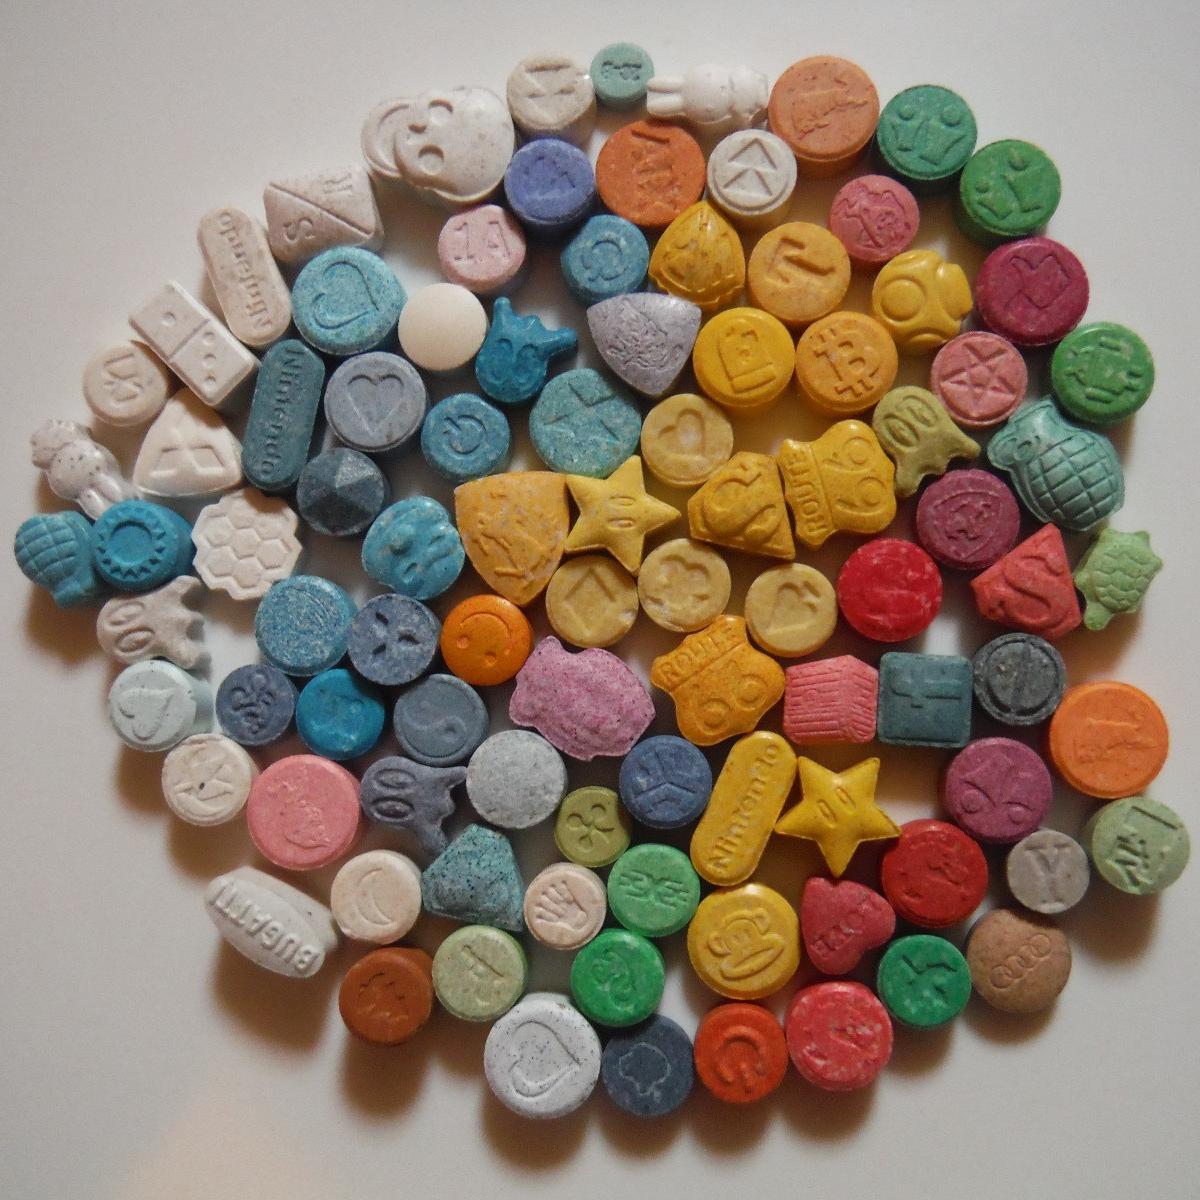 Ecstasy Pills Mdma pills